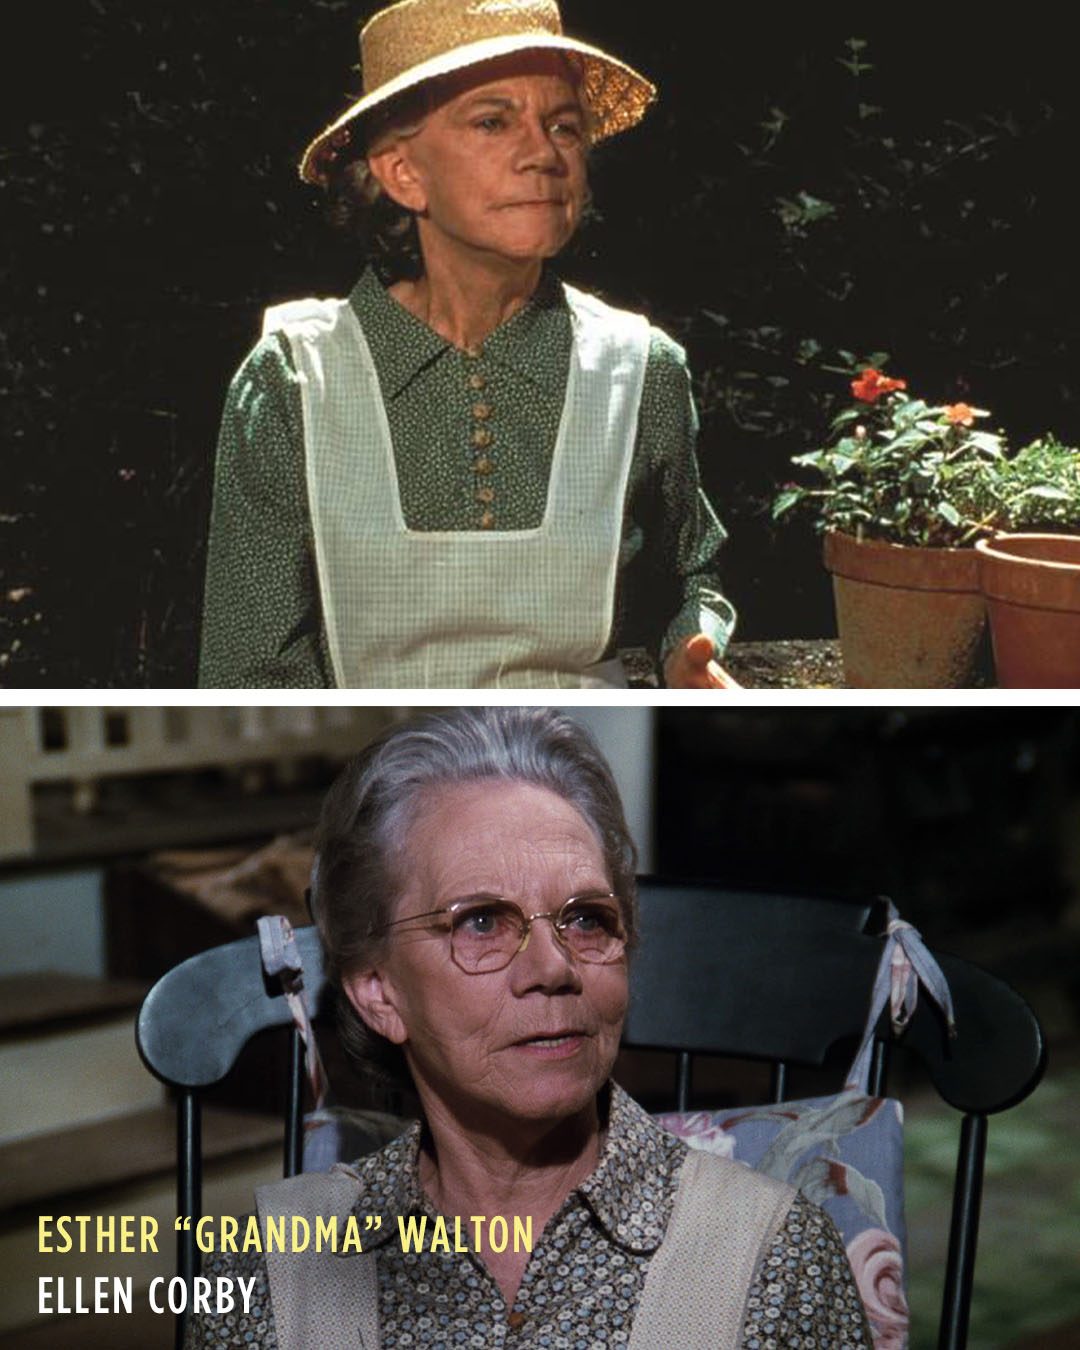 Ellen Corby as Esther "Grandma" Walton